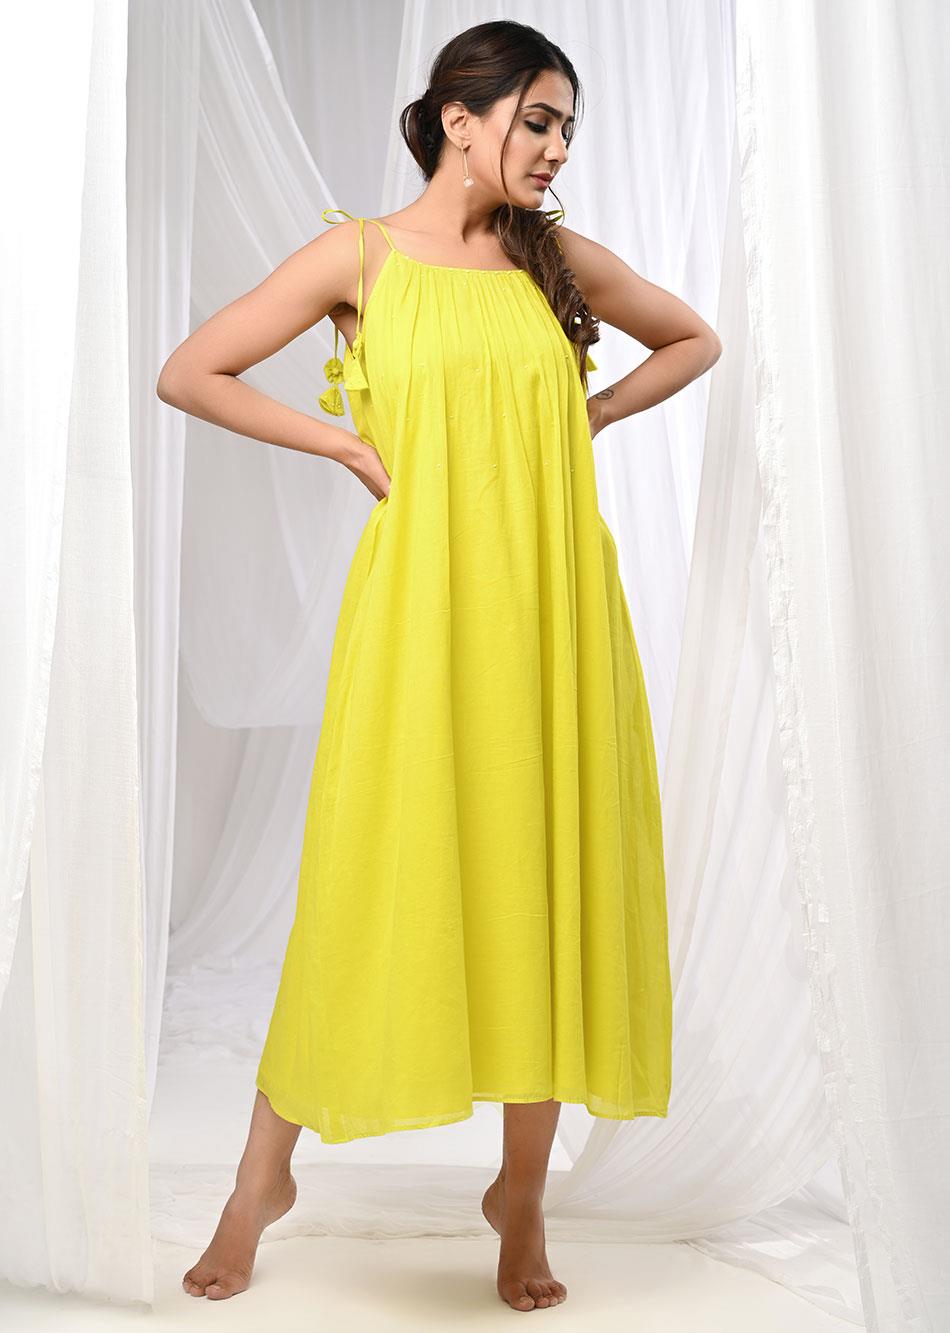 Summer Halter Dress (Electric Yellow) By Jovi Fashion